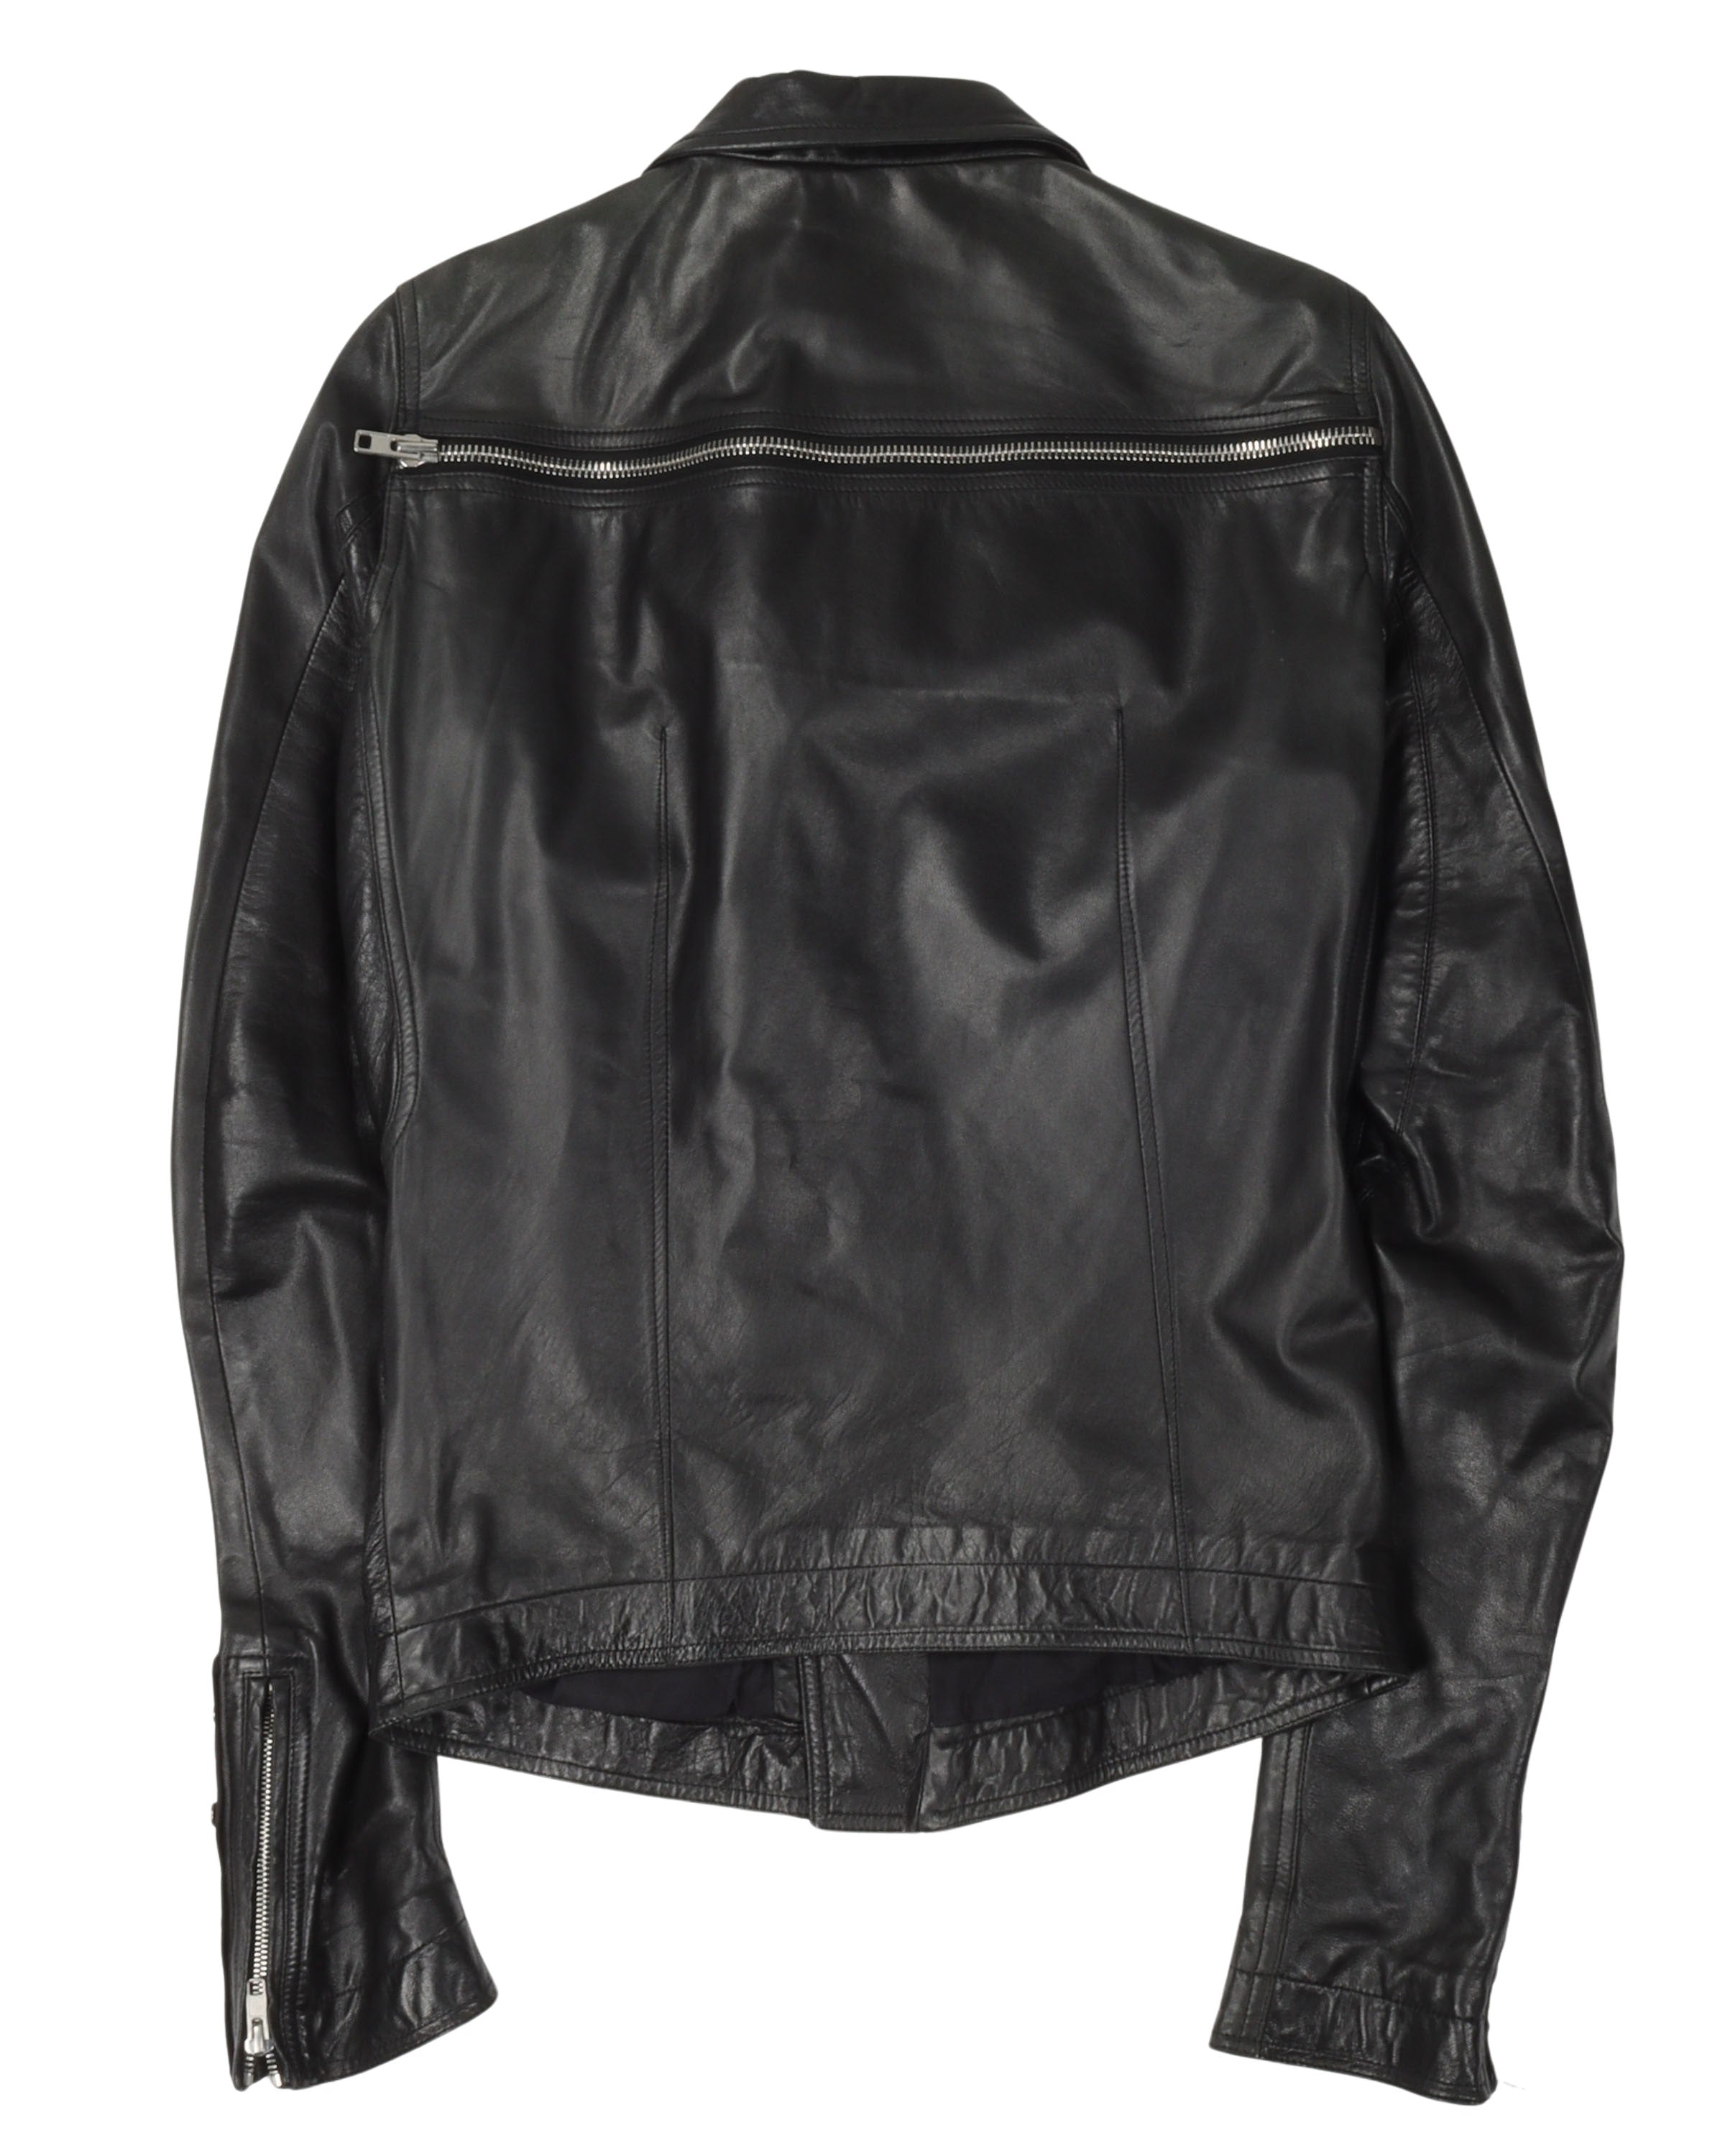 Stooges Lamb Leather Jacket